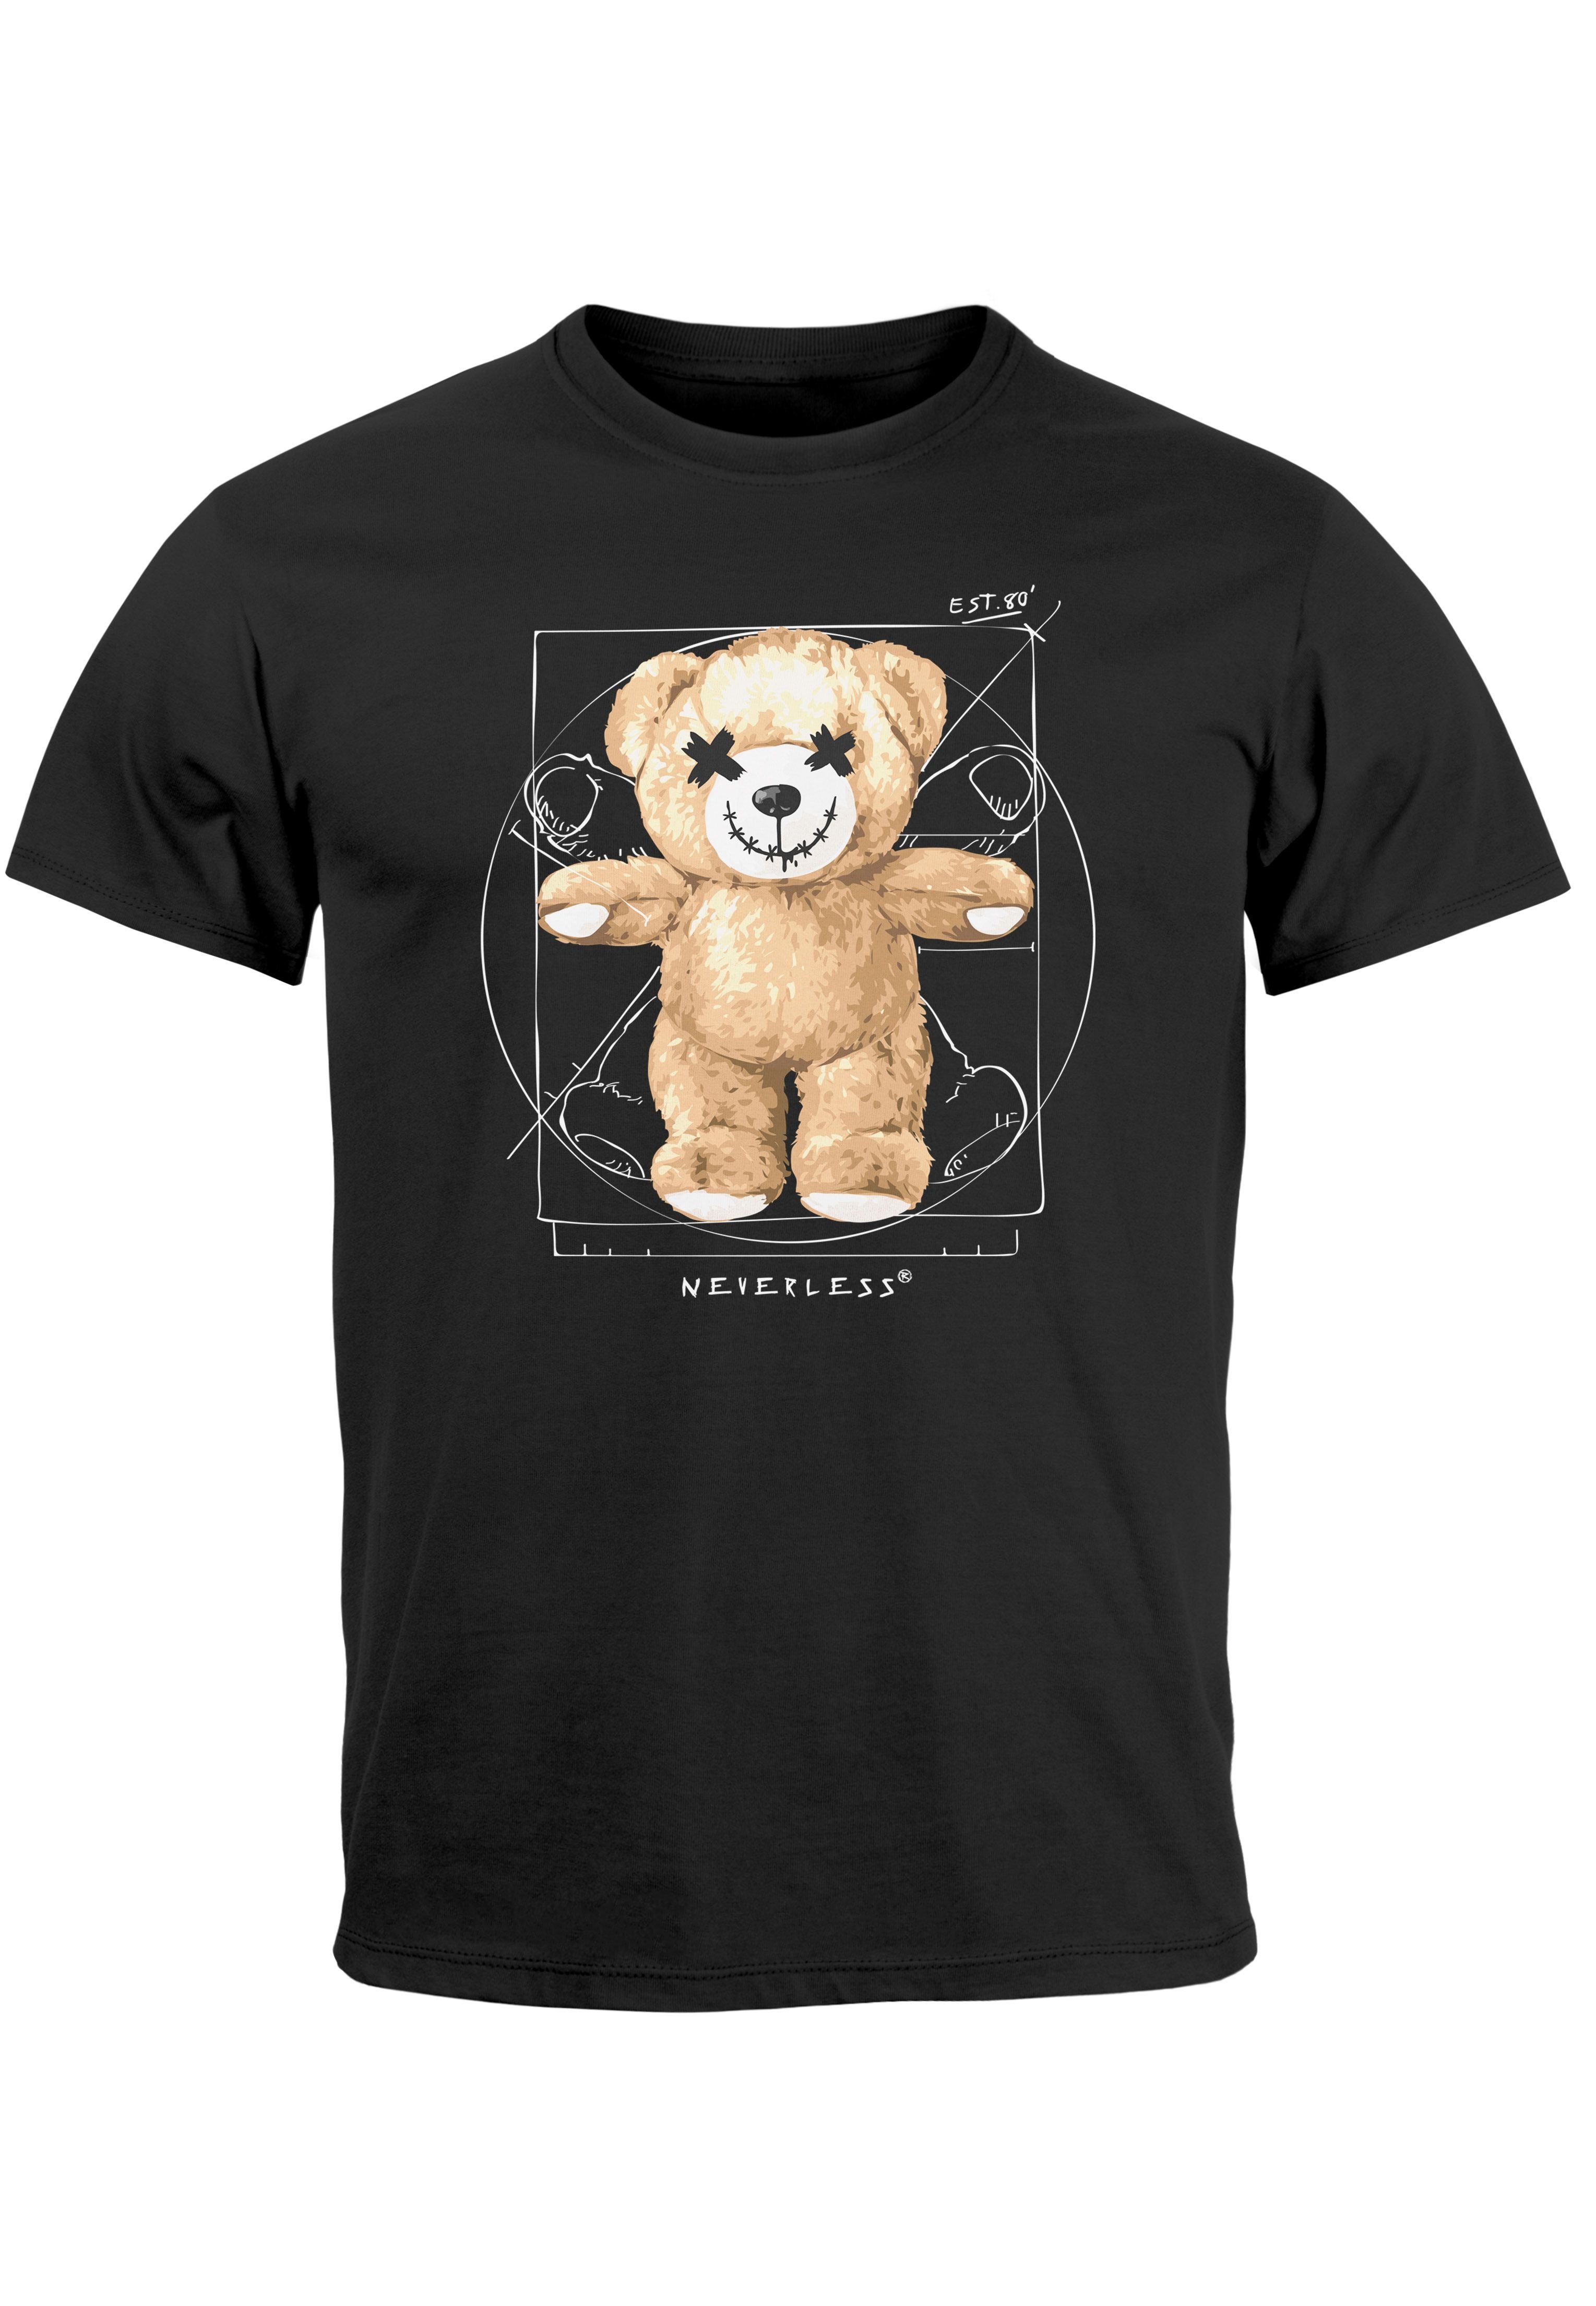 Neverless Print-Shirt Herren T-Shirt Print Teddy Bär DaVinci Meme Parodie Fashion Streetstyl mit Print schwarz